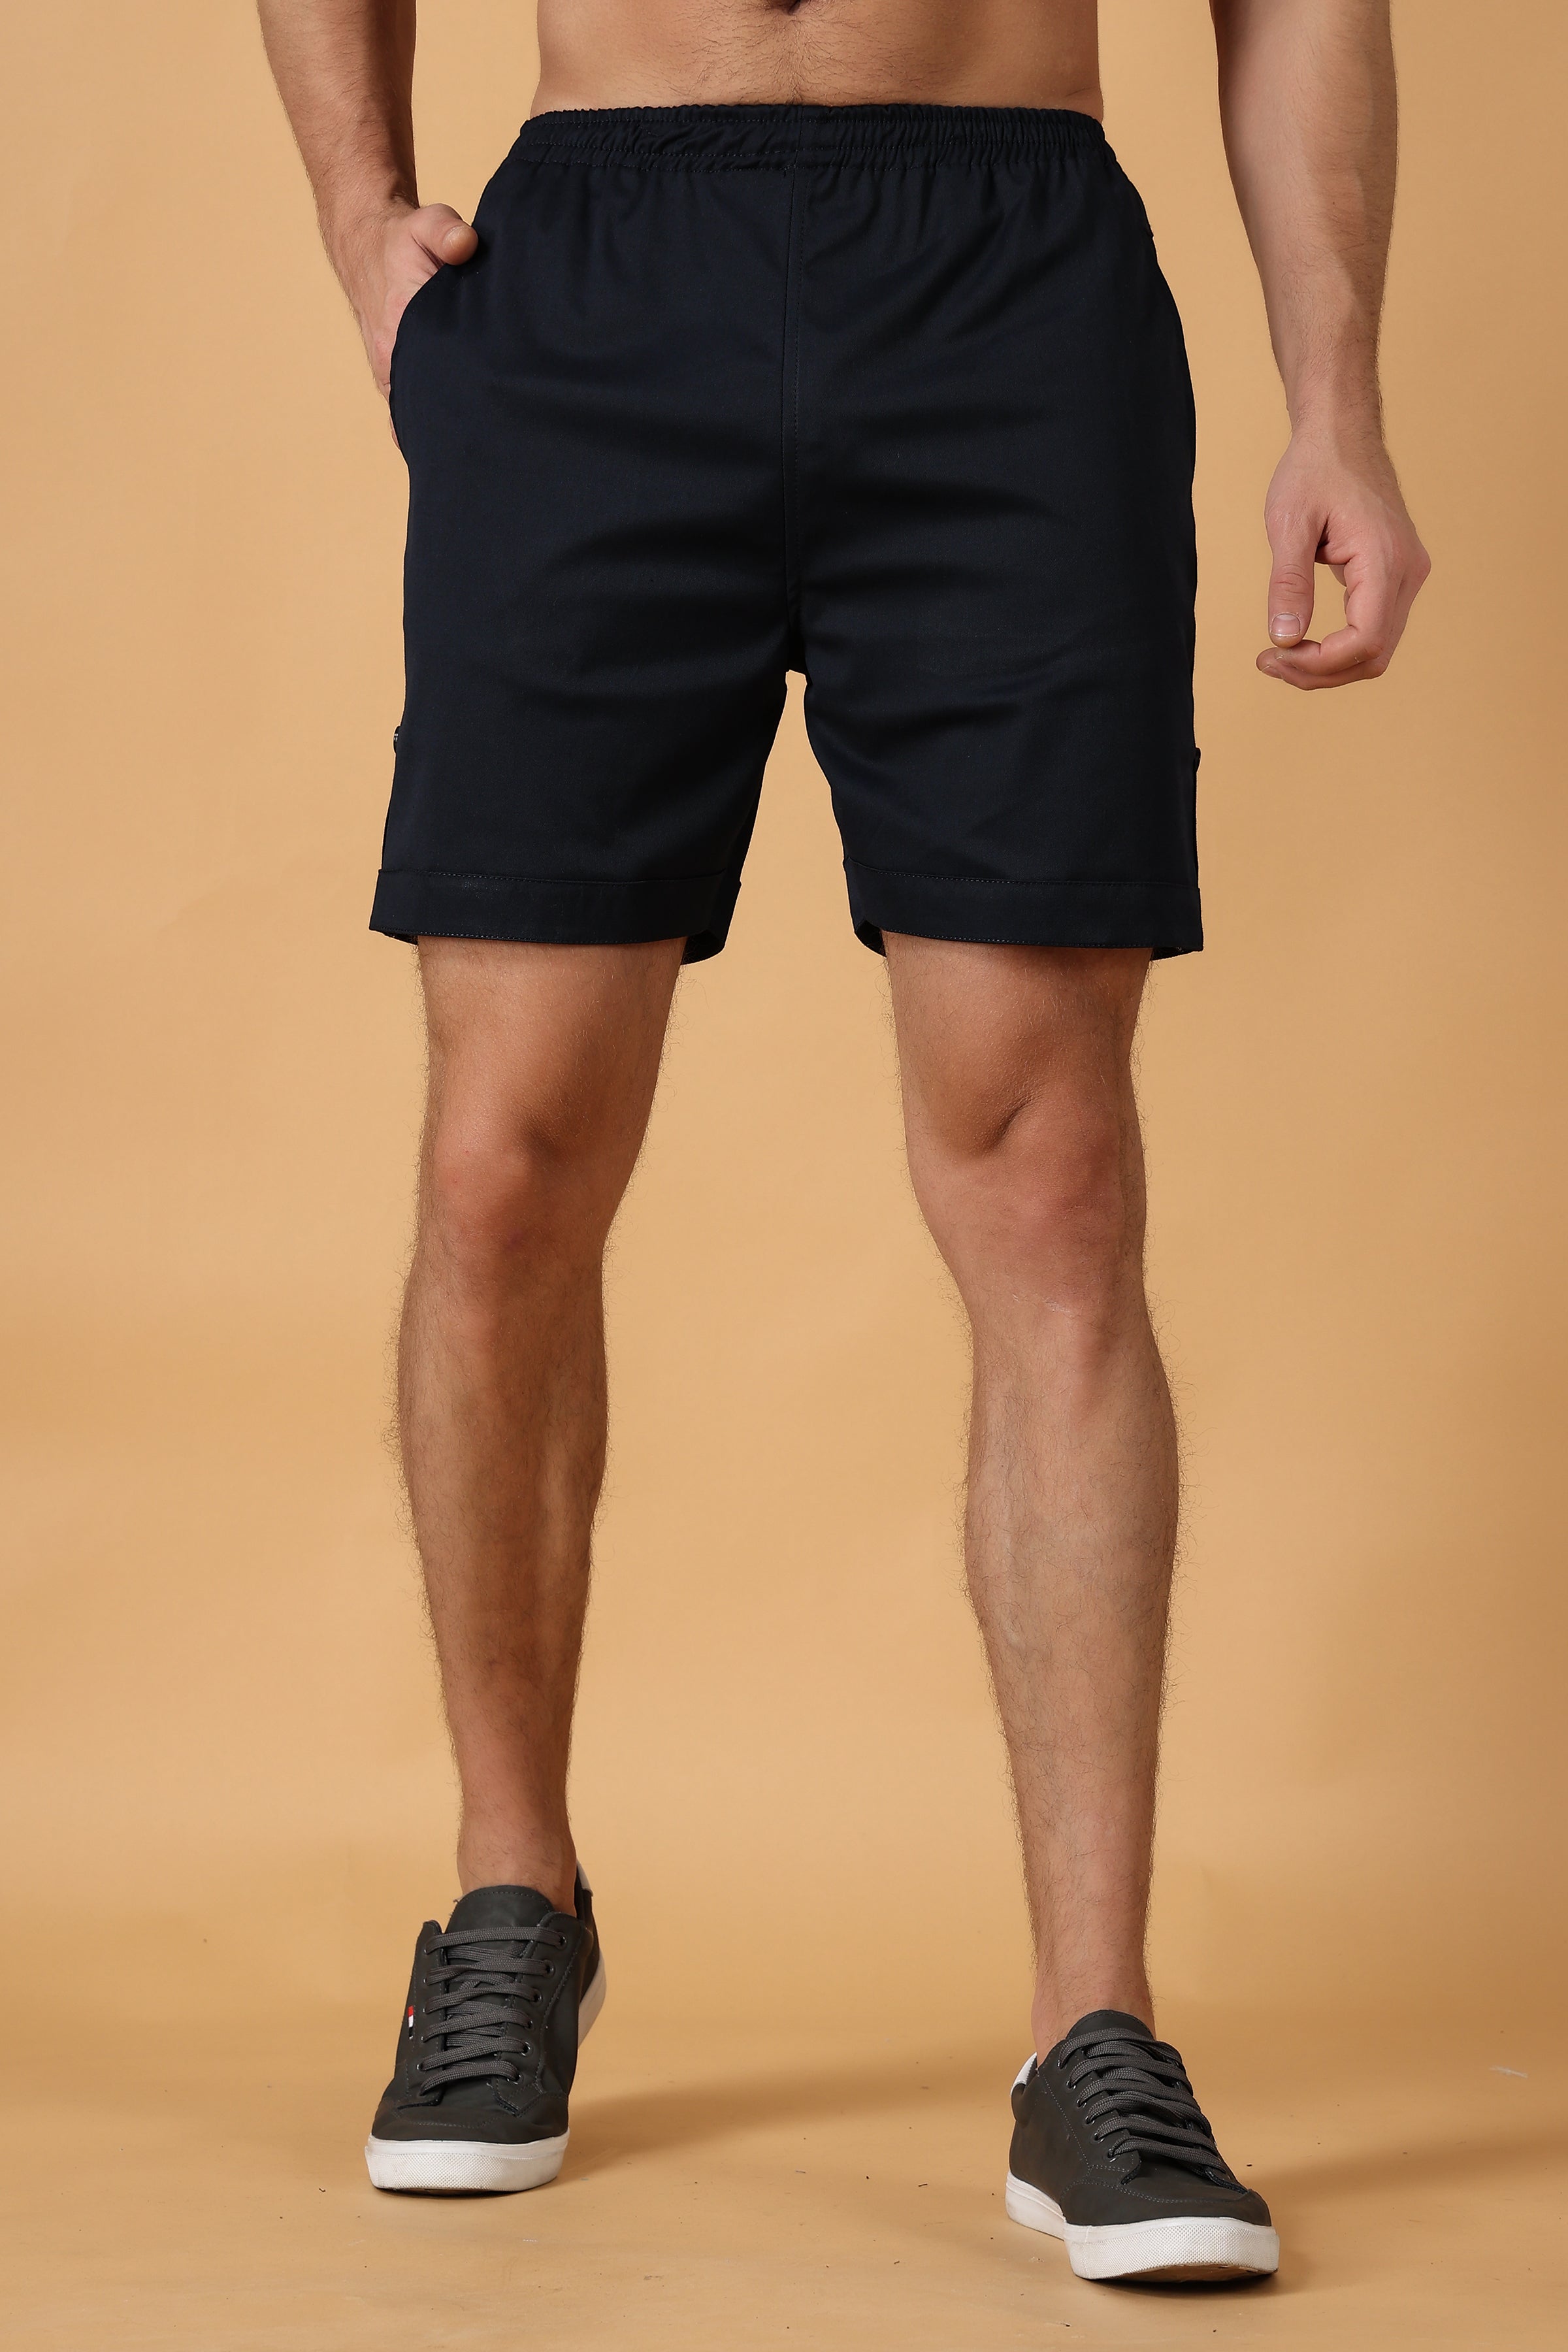 Sporto Men's Cotton Bermuda Shorts -Charcoal Grey – Sporto by Macho